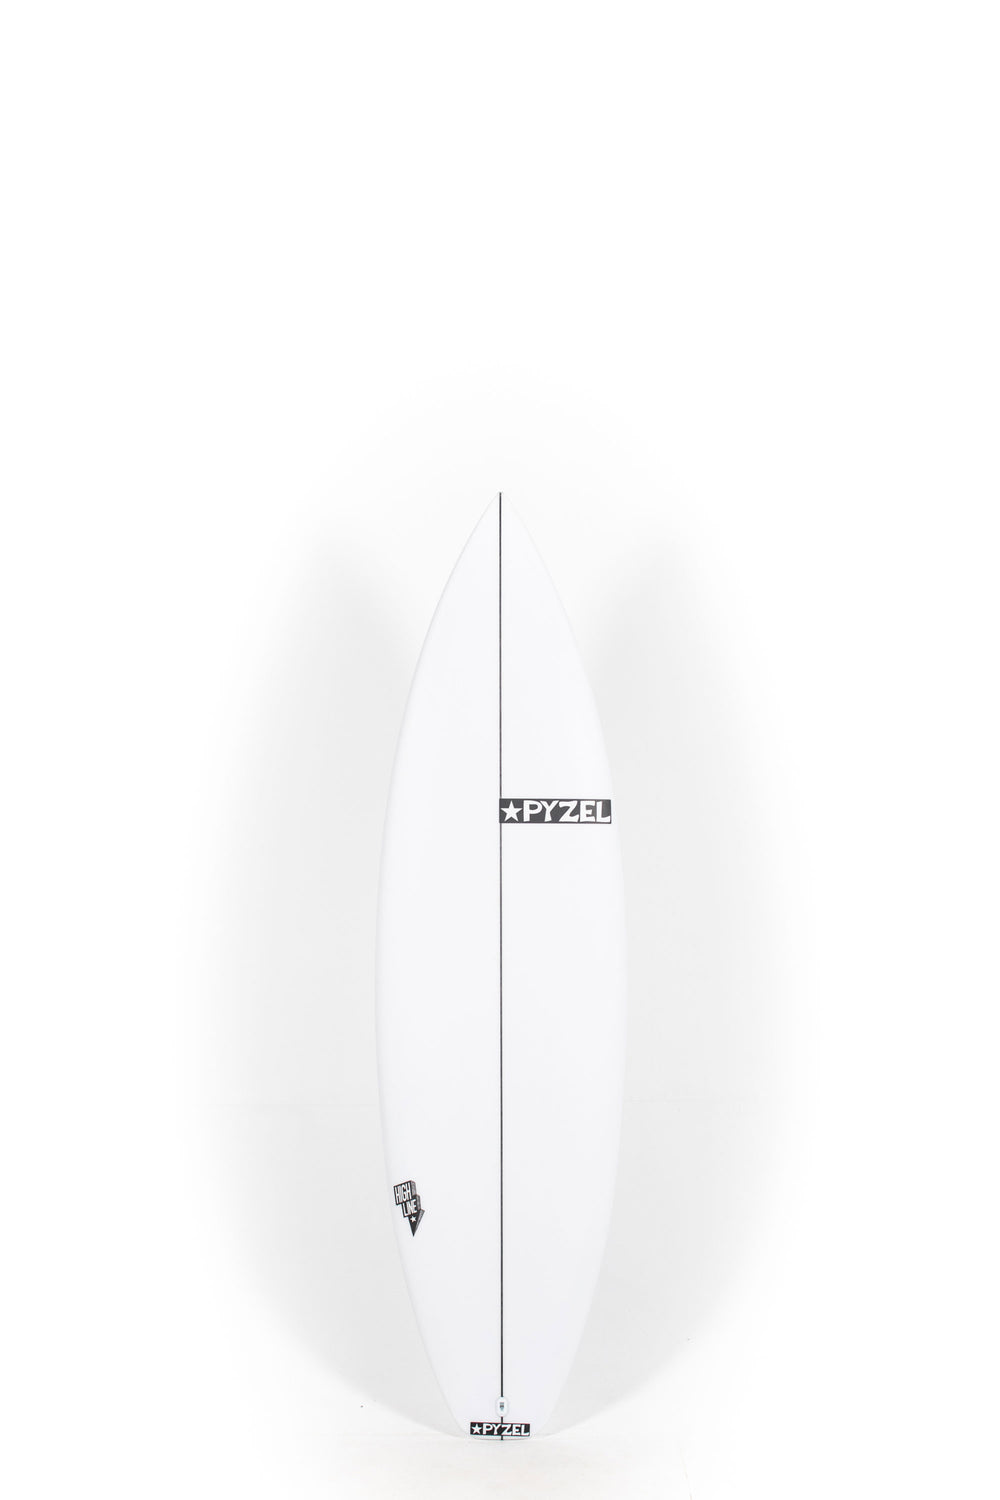 Pukas Surf Shop - Pyzel Surfboards - HIGH LINE - 6'0